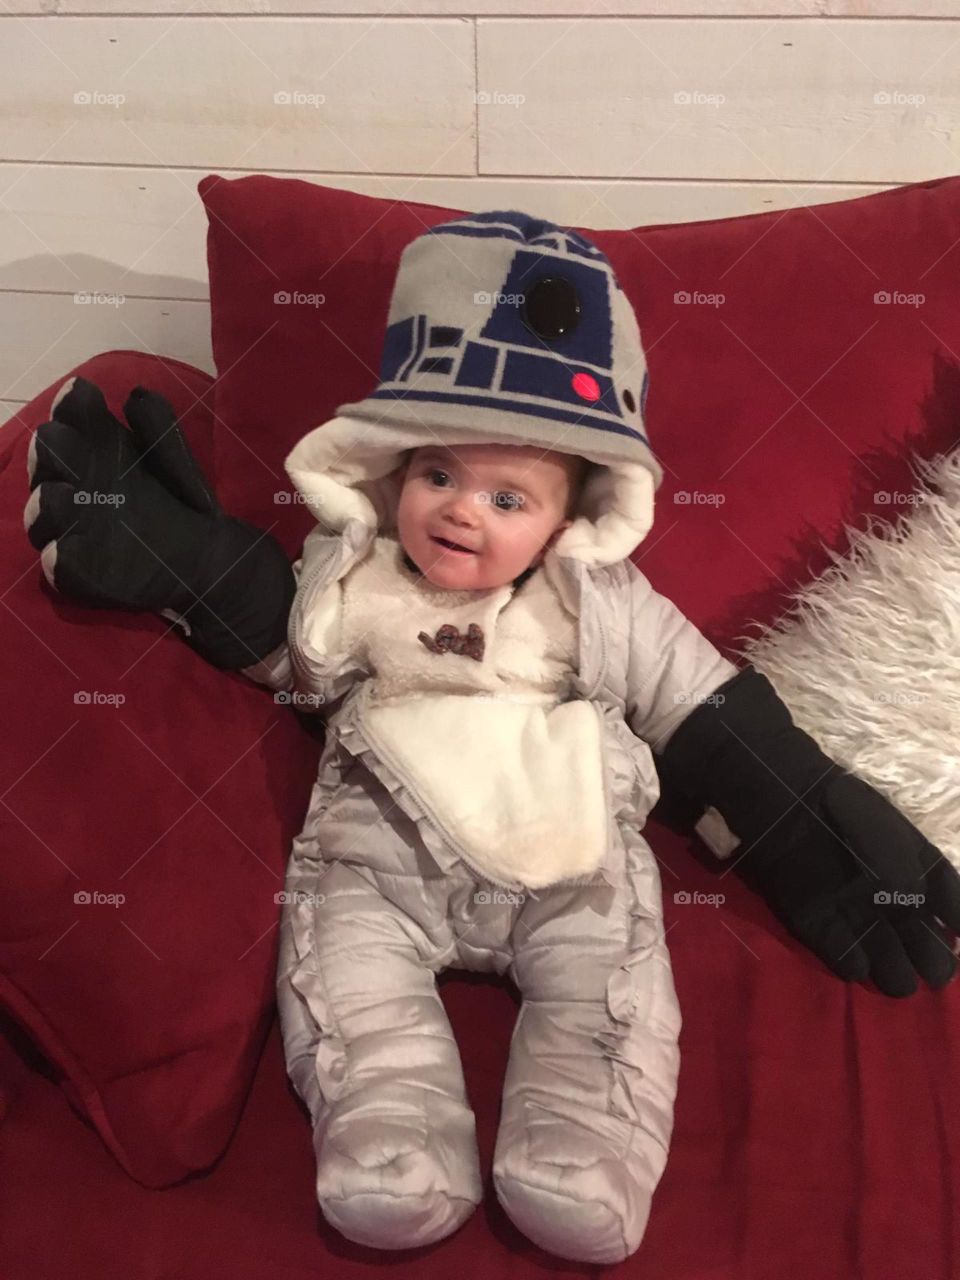 baby R2 D2